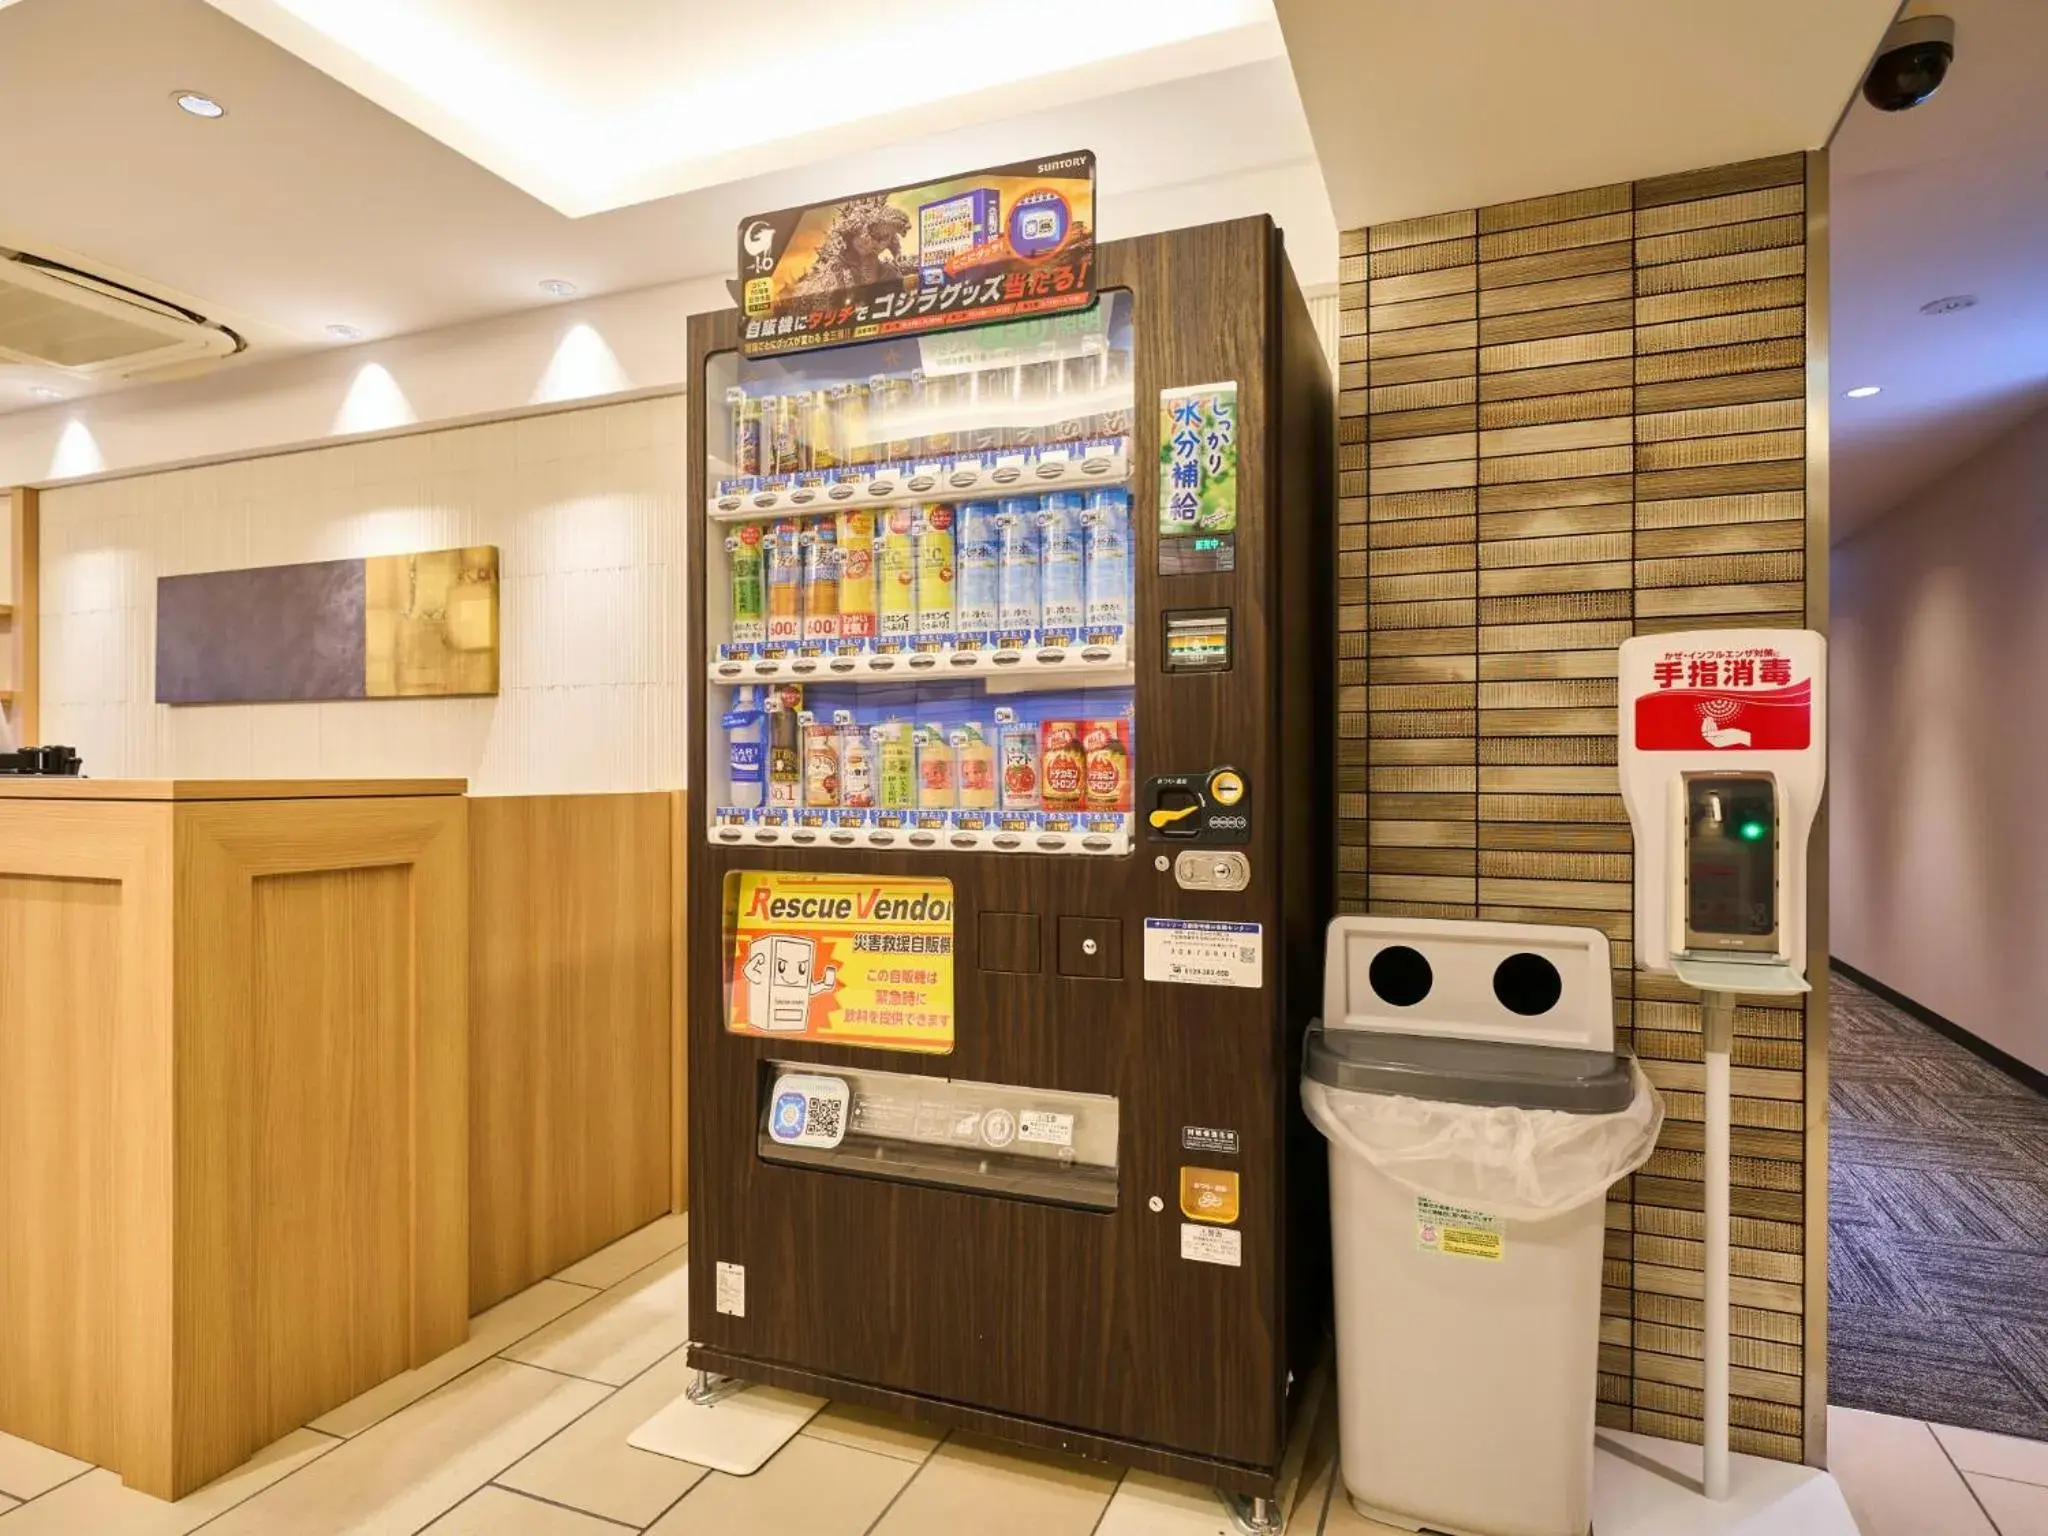 Area and facilities in Kyoto Daiichi Hotel